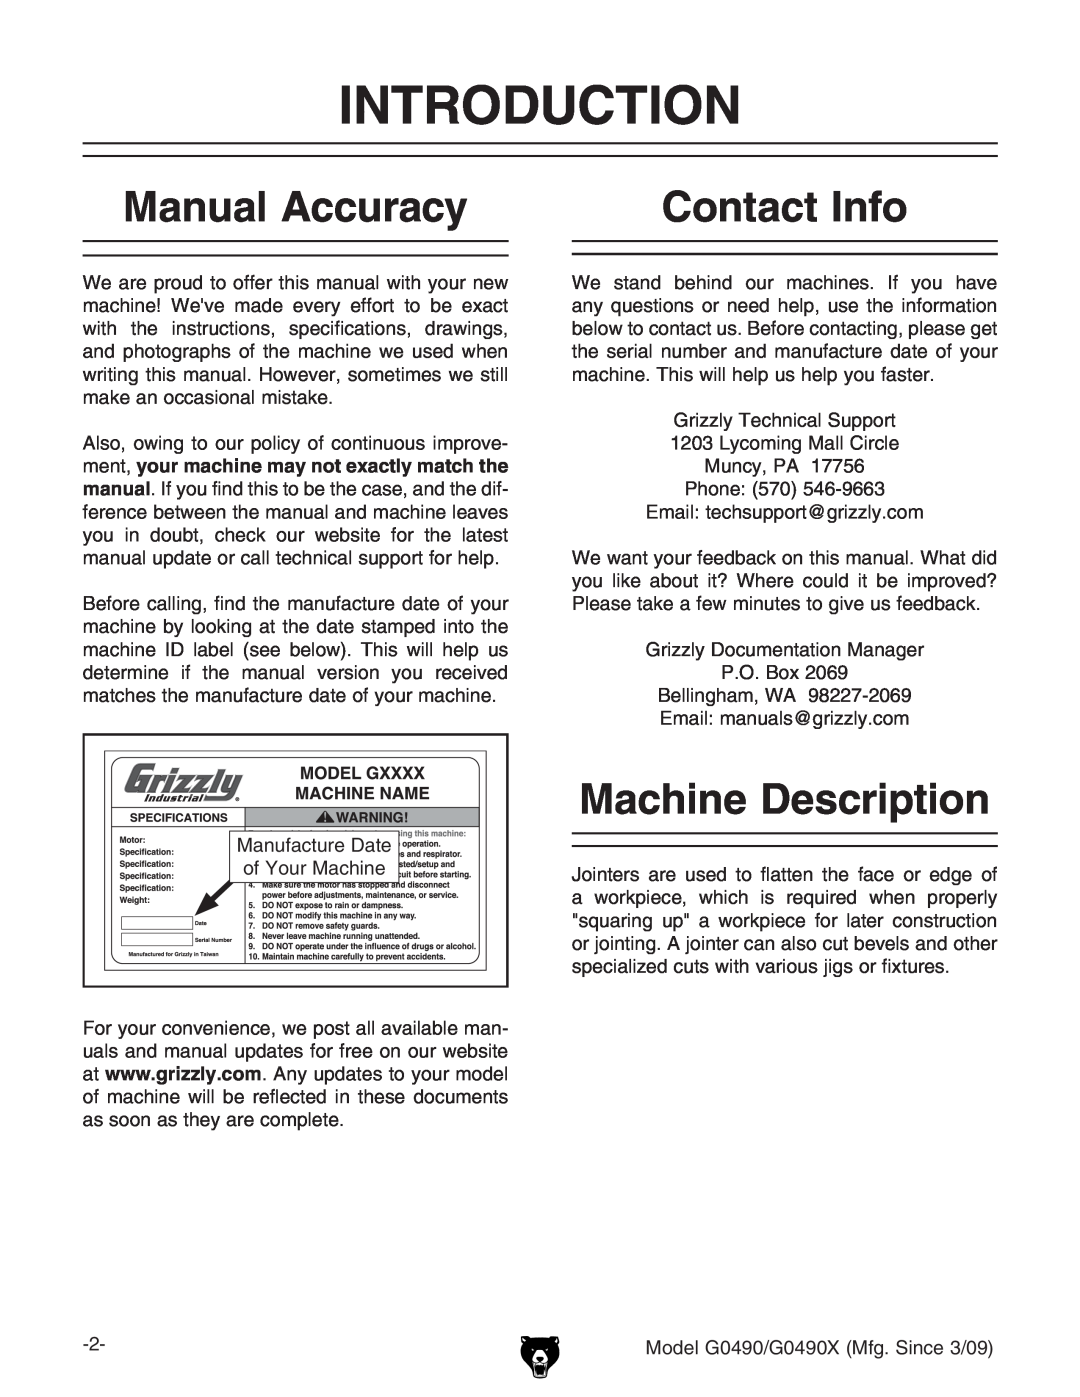 Grizzly G0490 owner manual Introduction, Manual Accuracy, Contact Info, Machine Description, dNdjgBVXcZ, BVcjVXijgZ9ViZ 